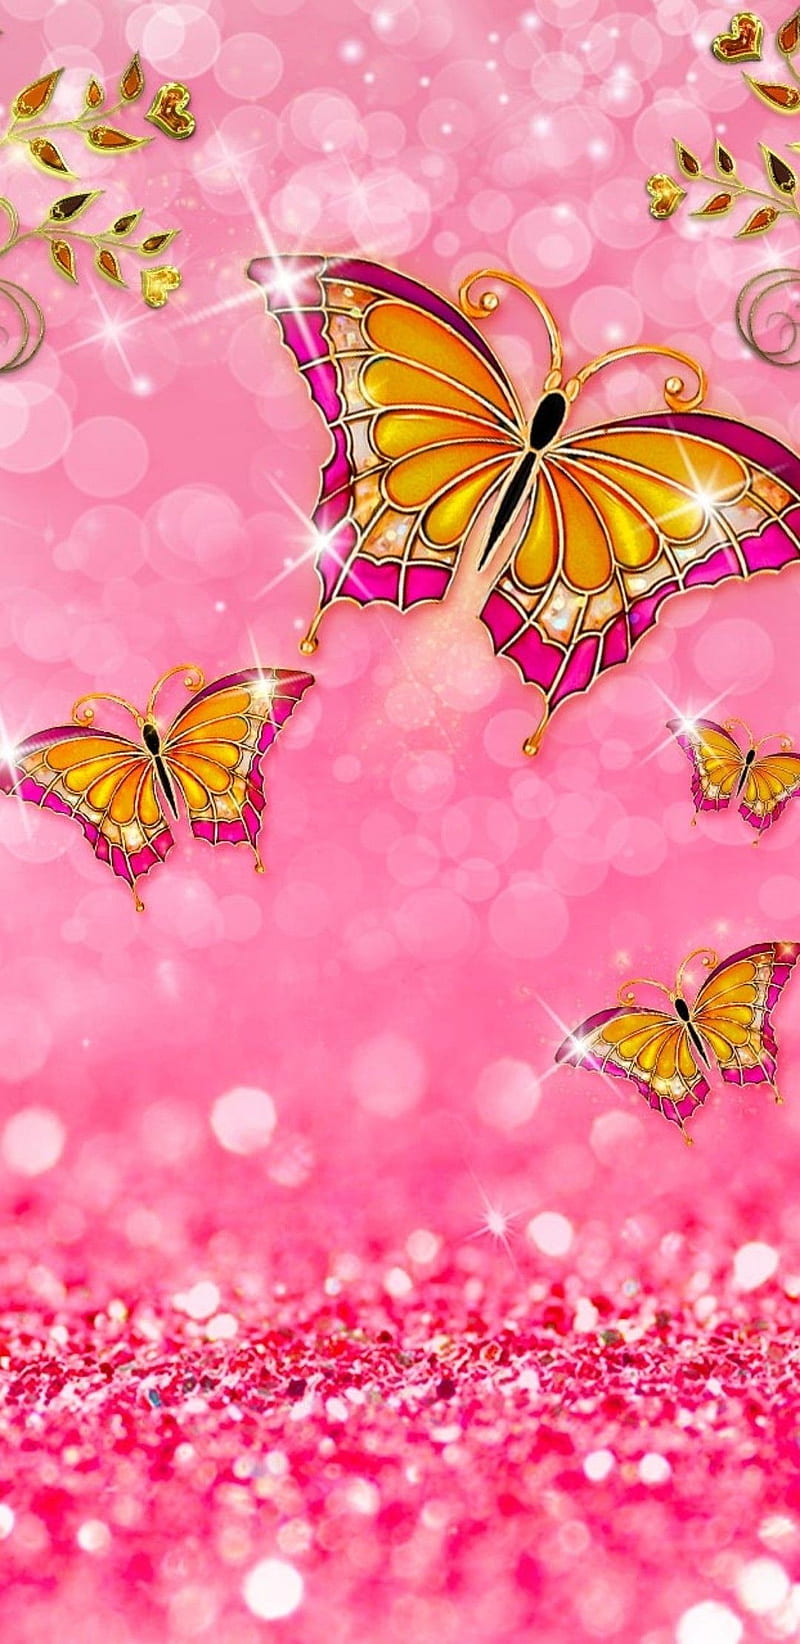 Butterfly aesthetic background pink design with sparkling stars  free  image by rawpixelcom  Busbus  Wallpaper kupukupu Kupukupu